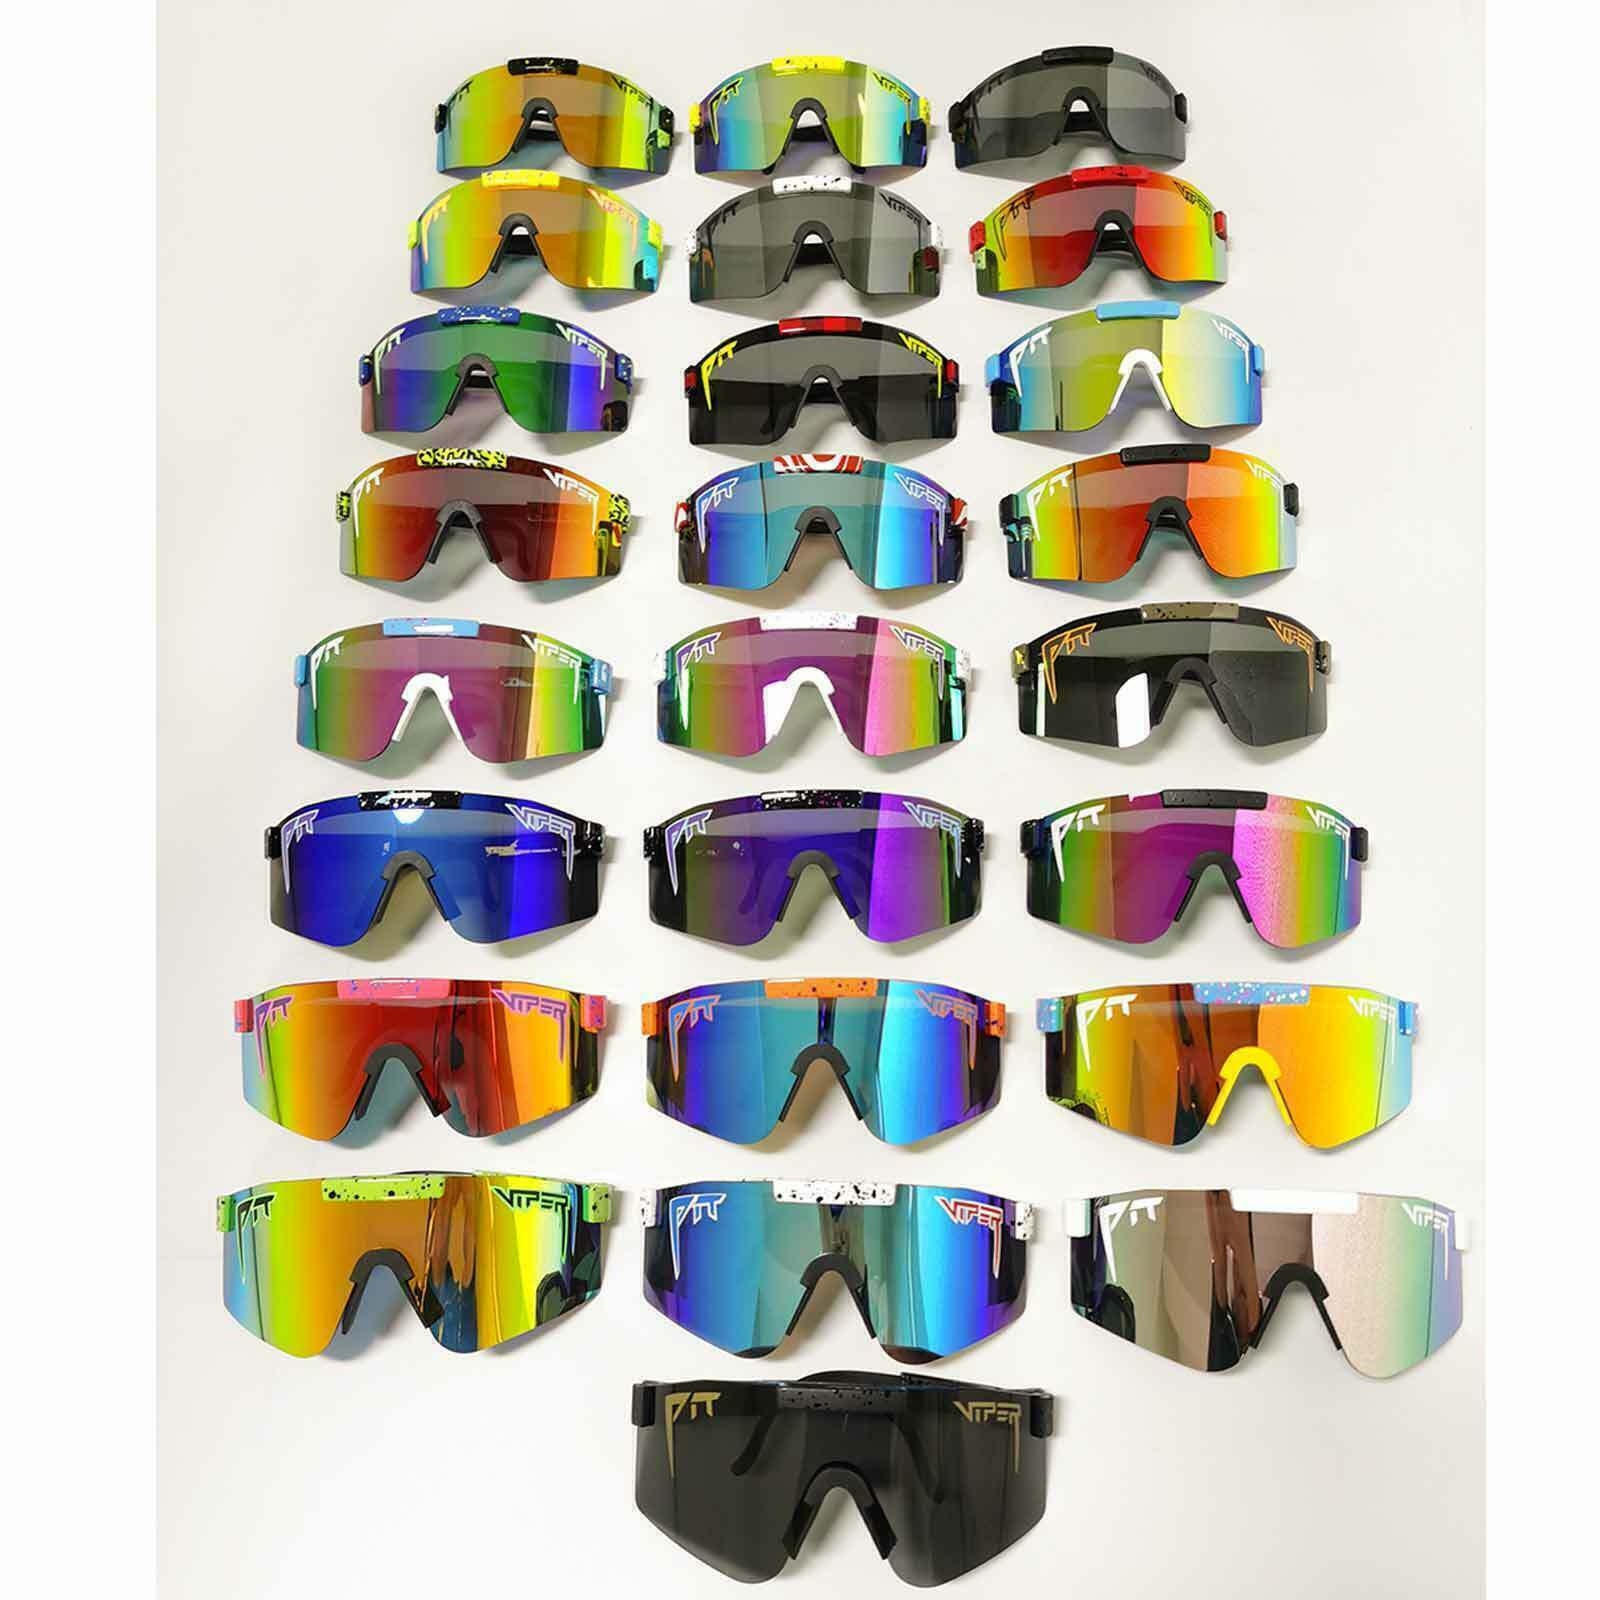 Vipers Sunglasses -